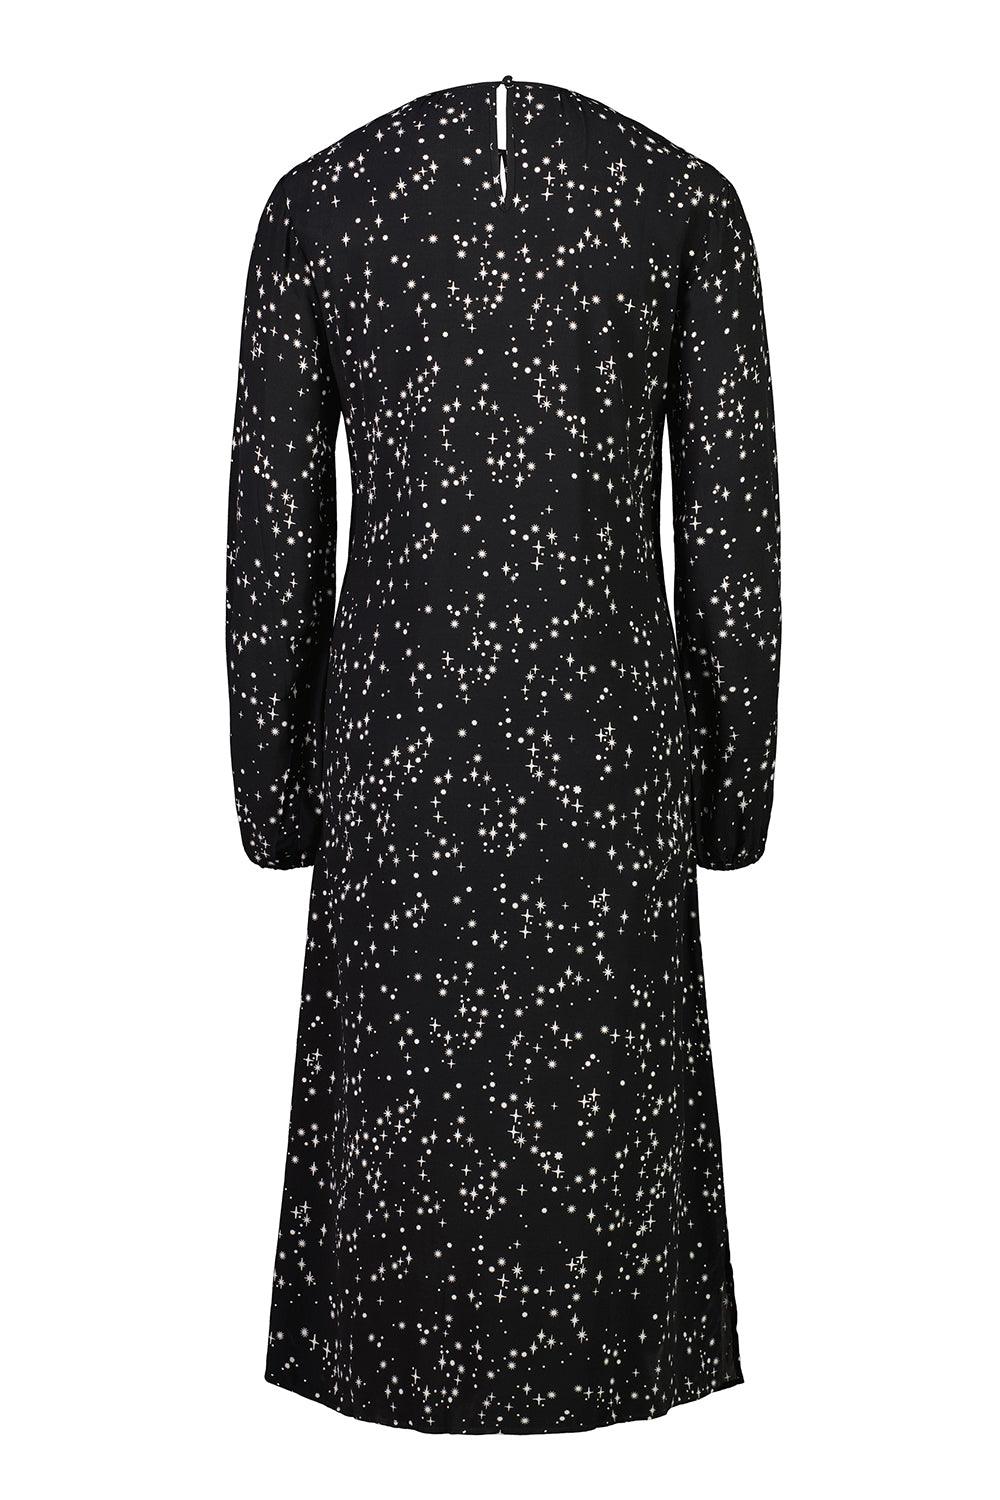 Starlight Dress - Print - Dress VERGE